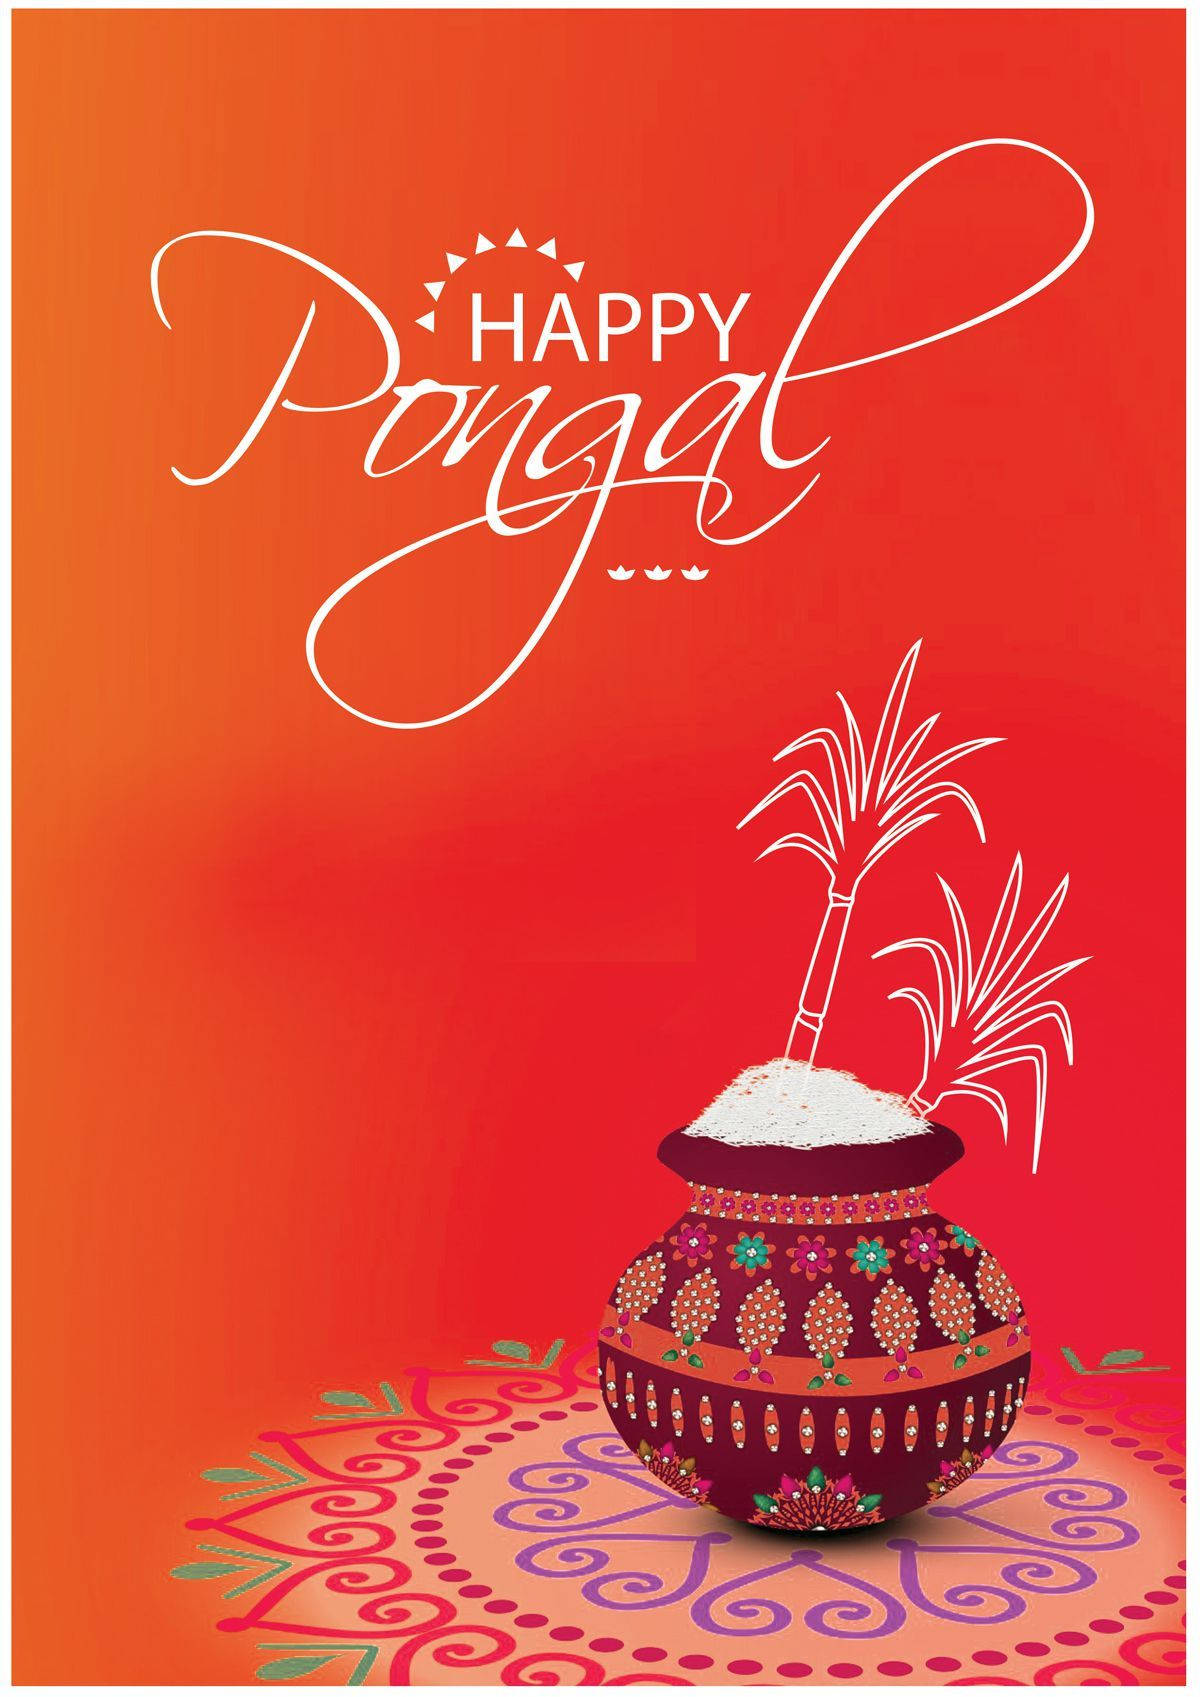 Happy Pongal Festivity Greetings